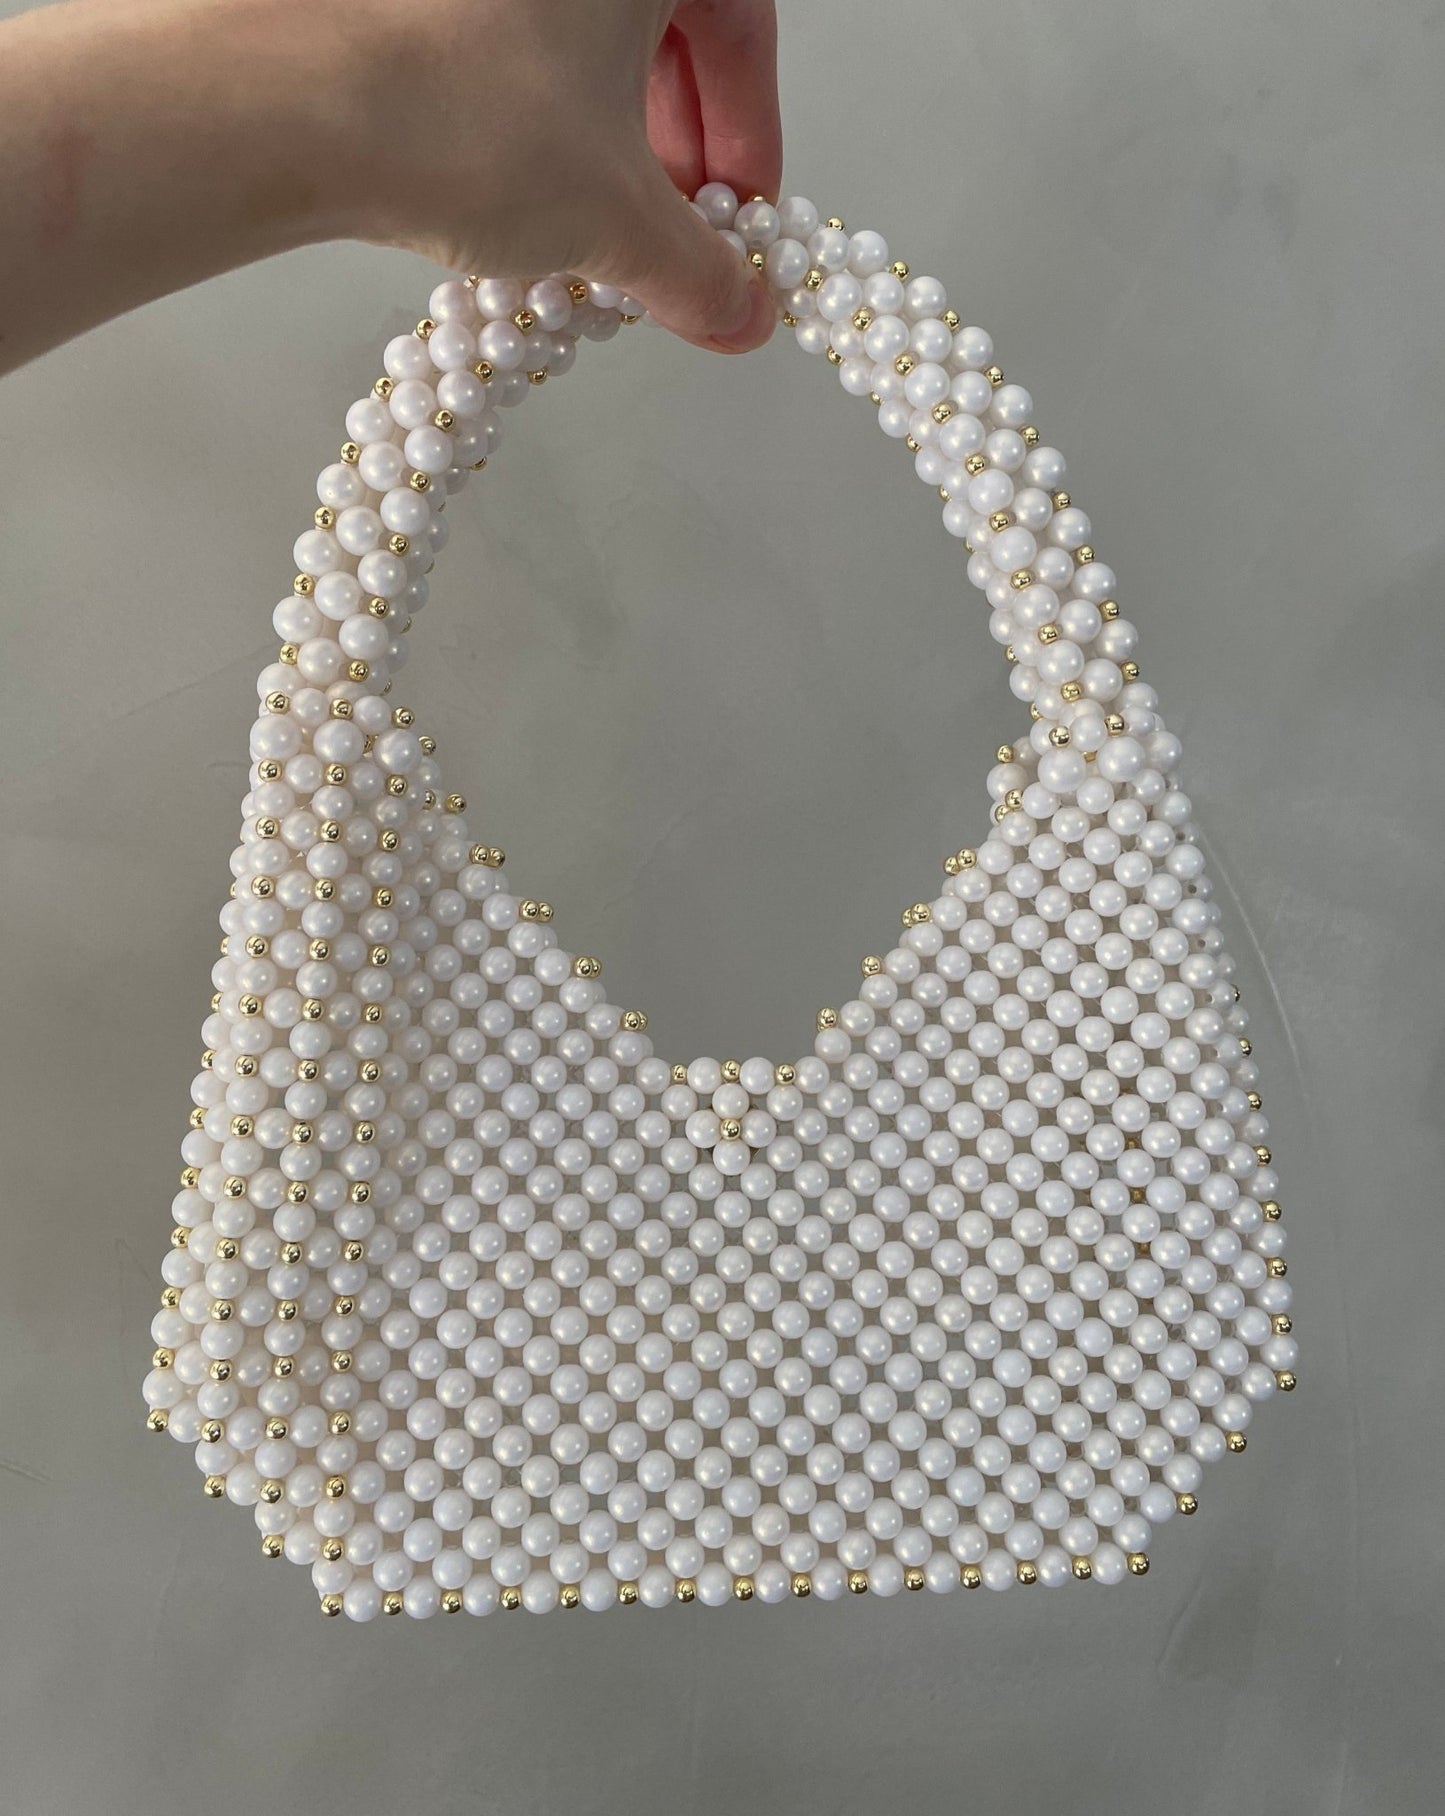 Handtasche aus Perlen - GRAYSS FASHION & HOME